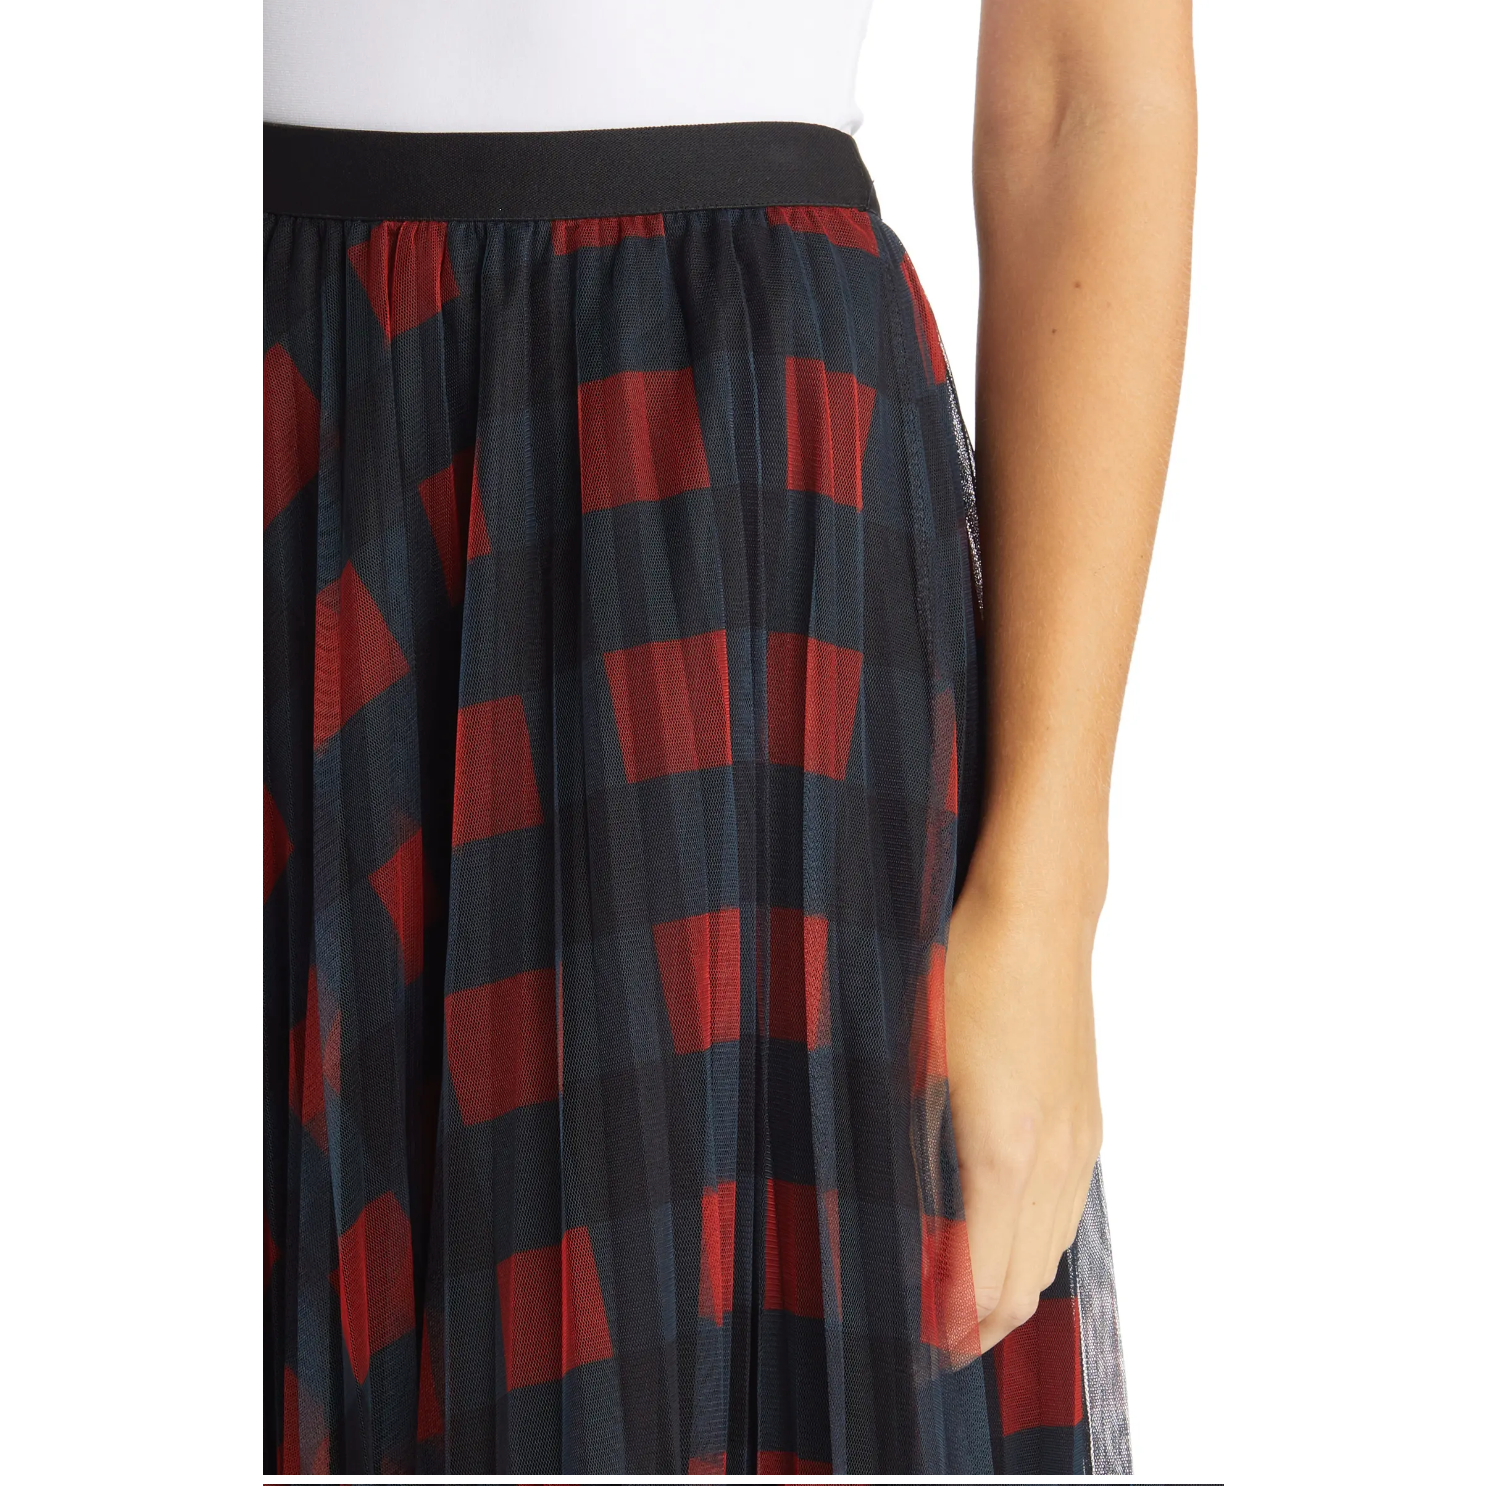 Belinda Plaid A-Line Skirt